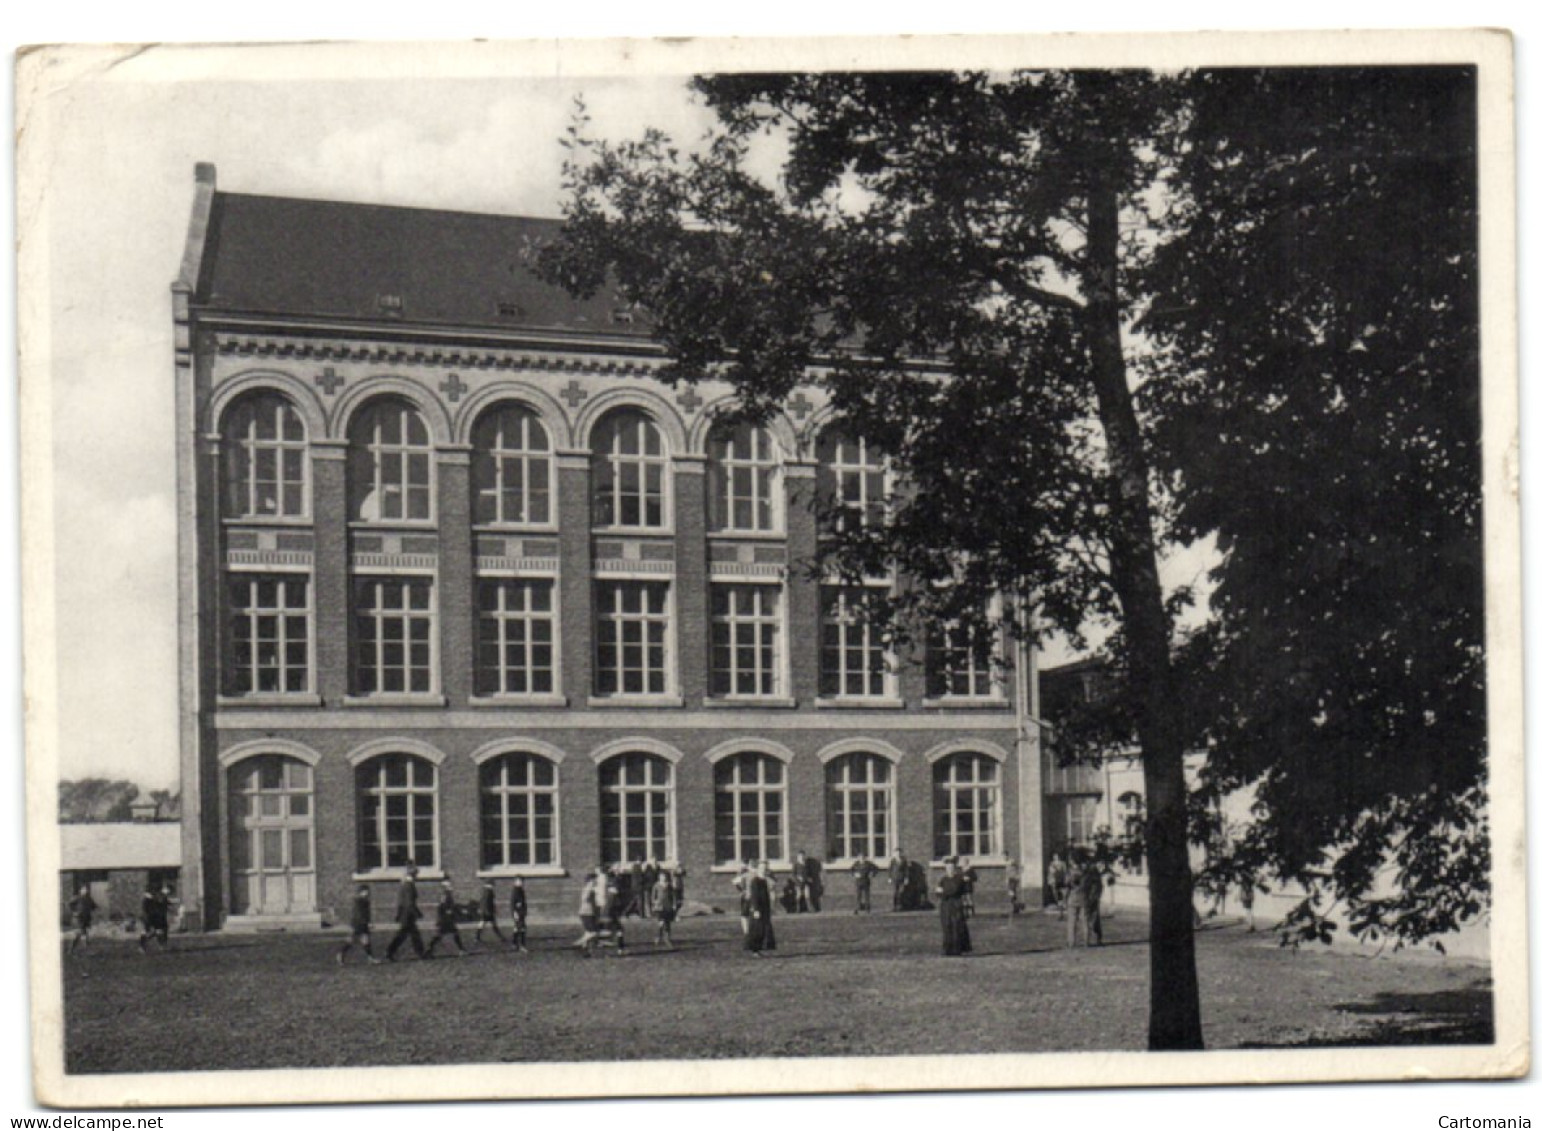 Sirault - Collège Du Christ-Roi - Cour De Récréation - Saint-Ghislain